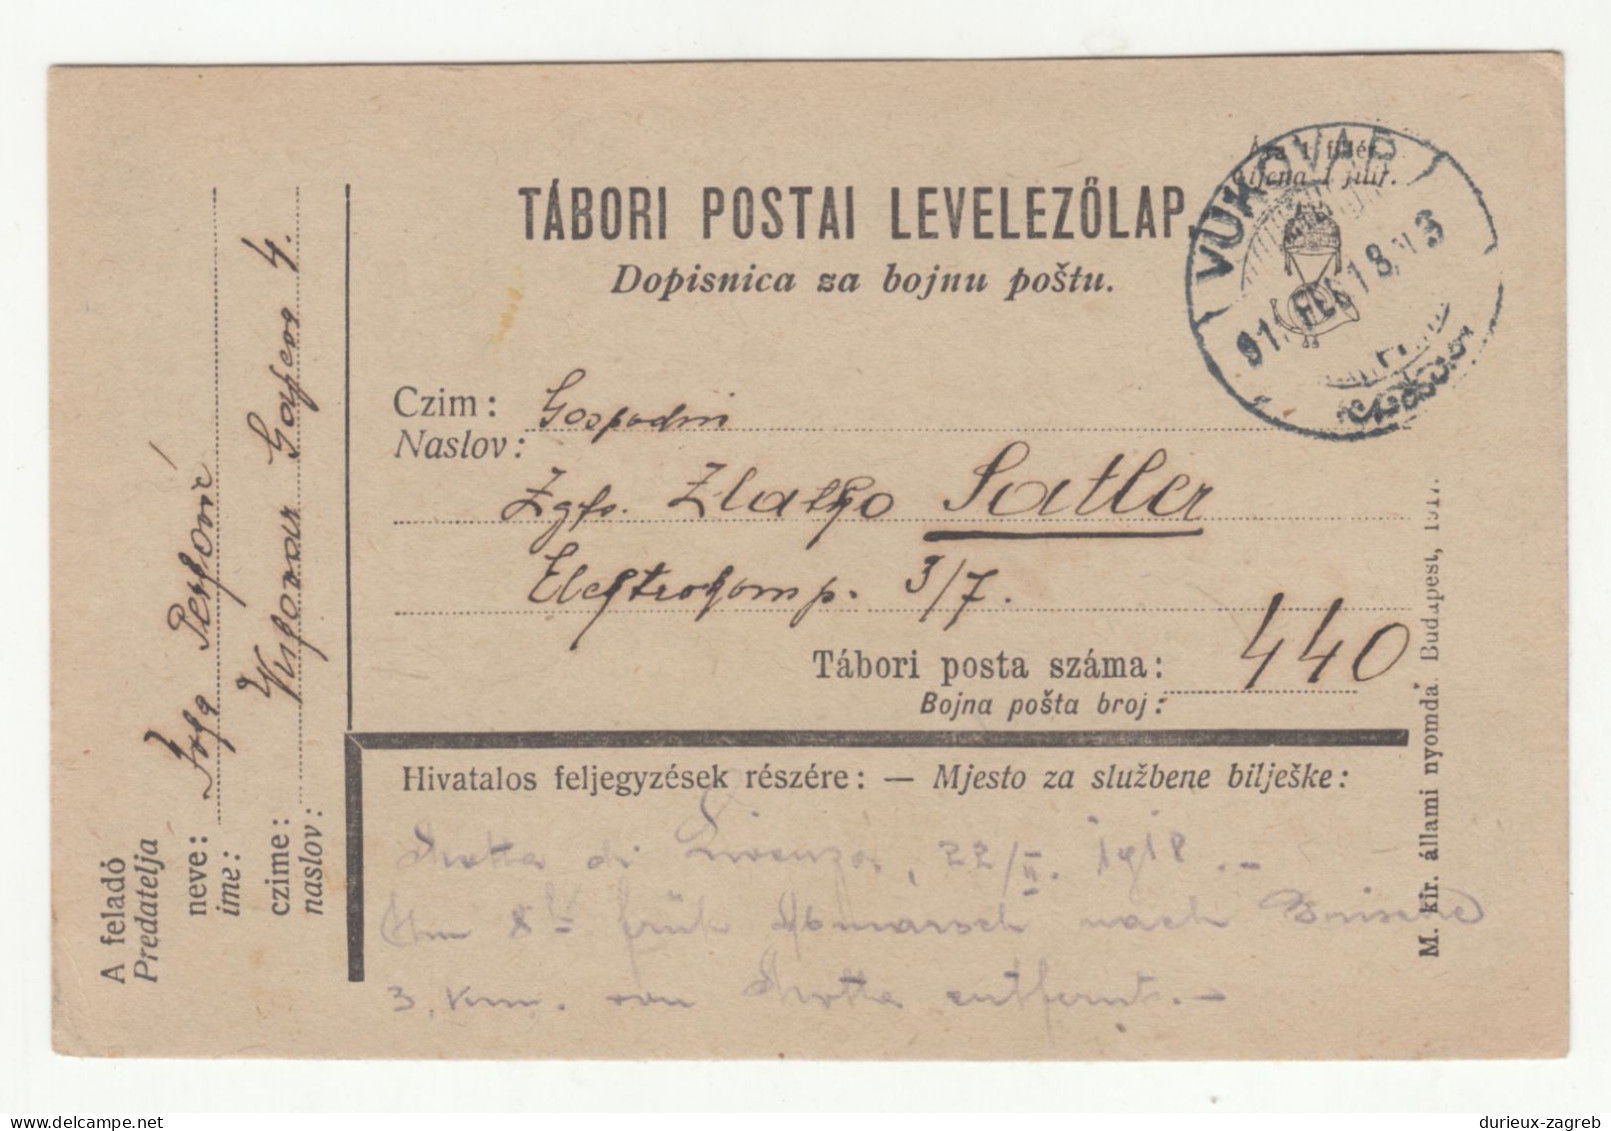 Hungary Croatia Postal Stationery Tabori Postai Levelezőlap Dopisnica Za Bojnu Poštu Posted 1918 Vukovar Pmk B240401 - Kroatien